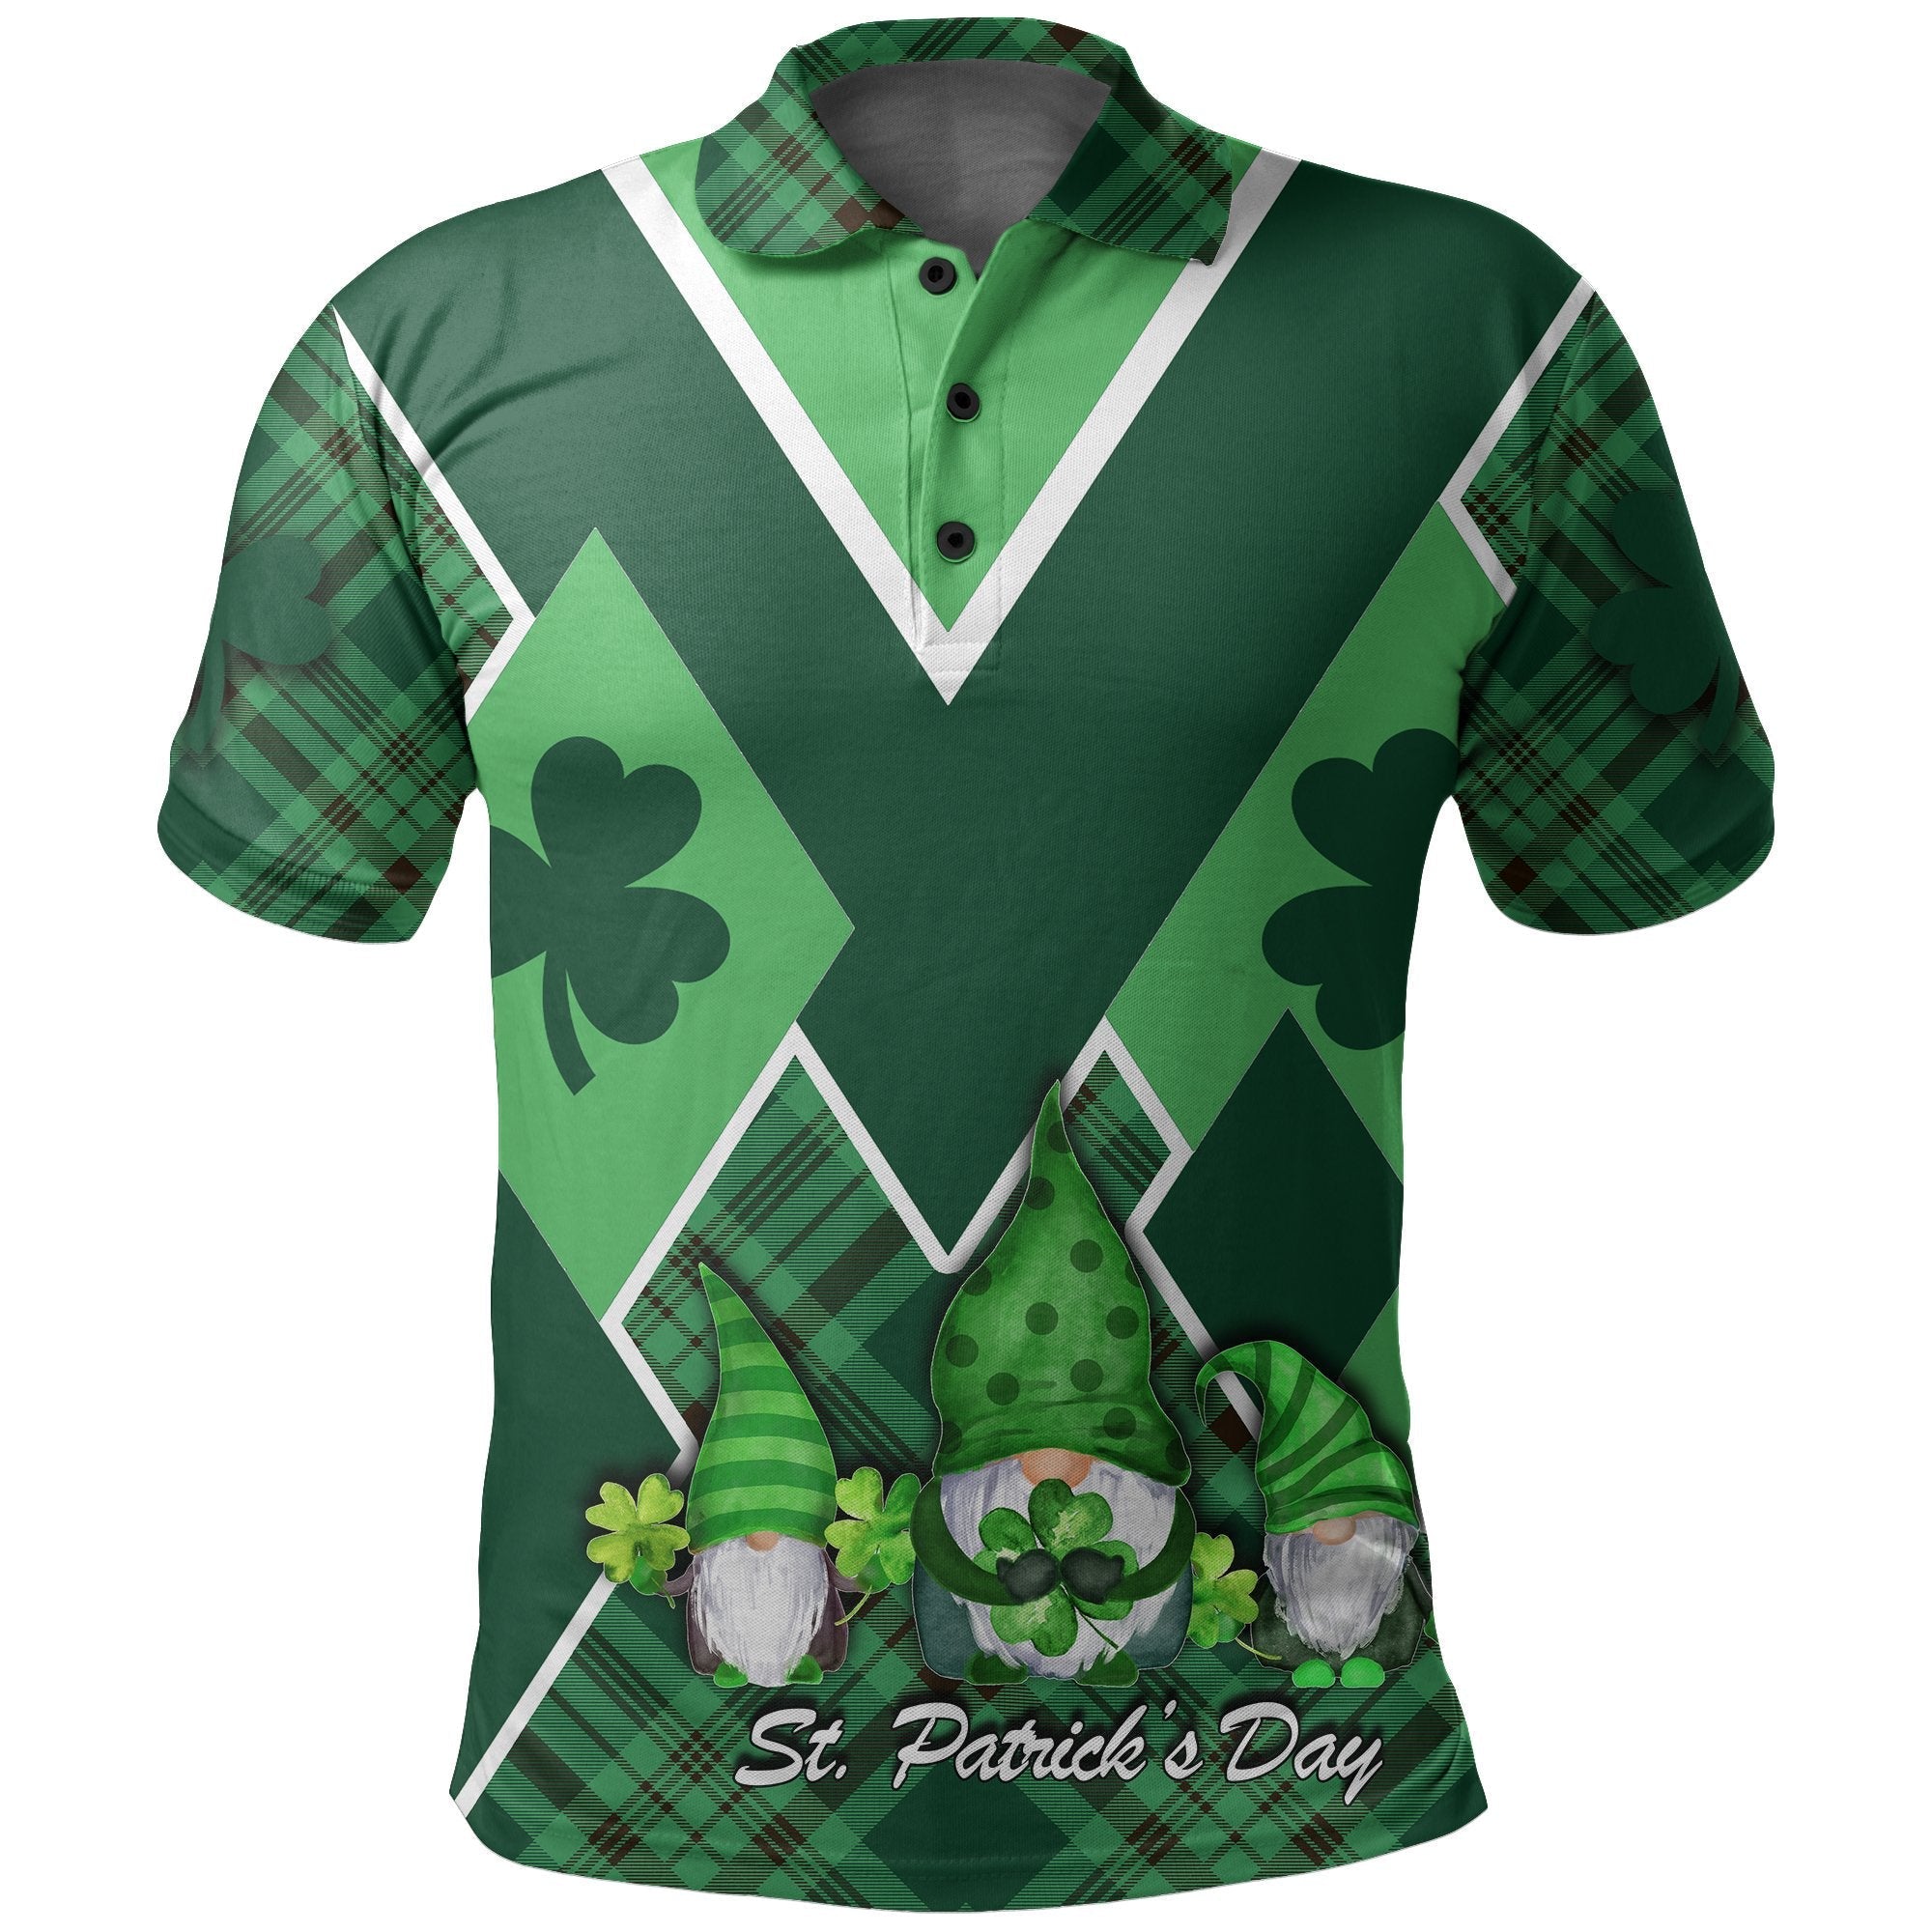 st-patrick-s-day-ireland-gnome-polo-shirt-shamrock